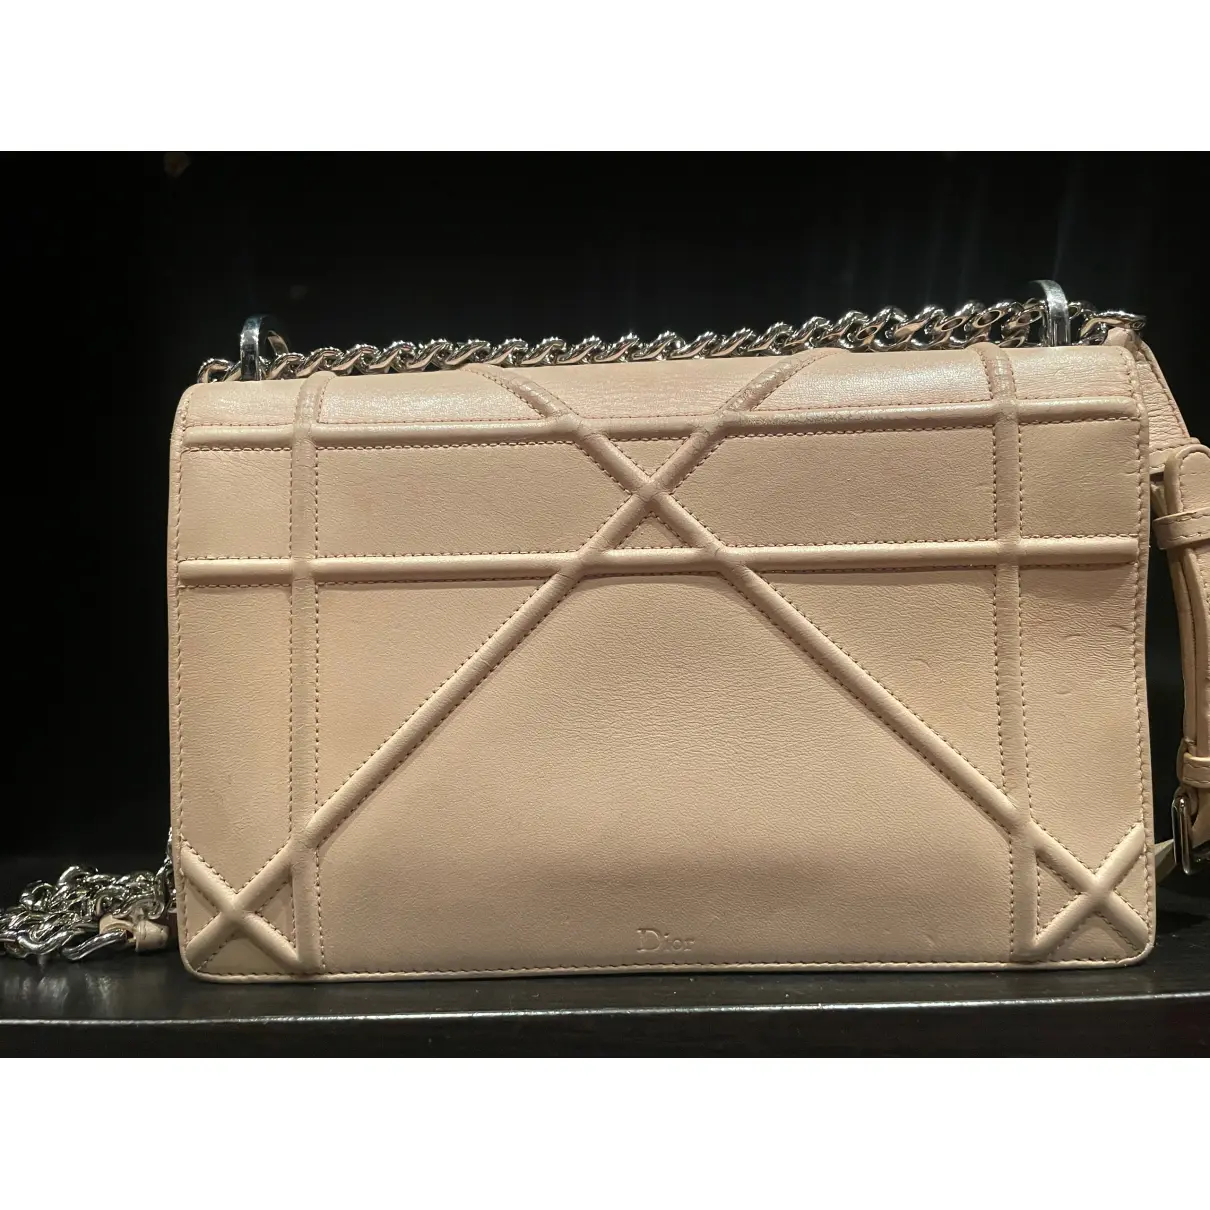 Buy Dior Diorama leather handbag online